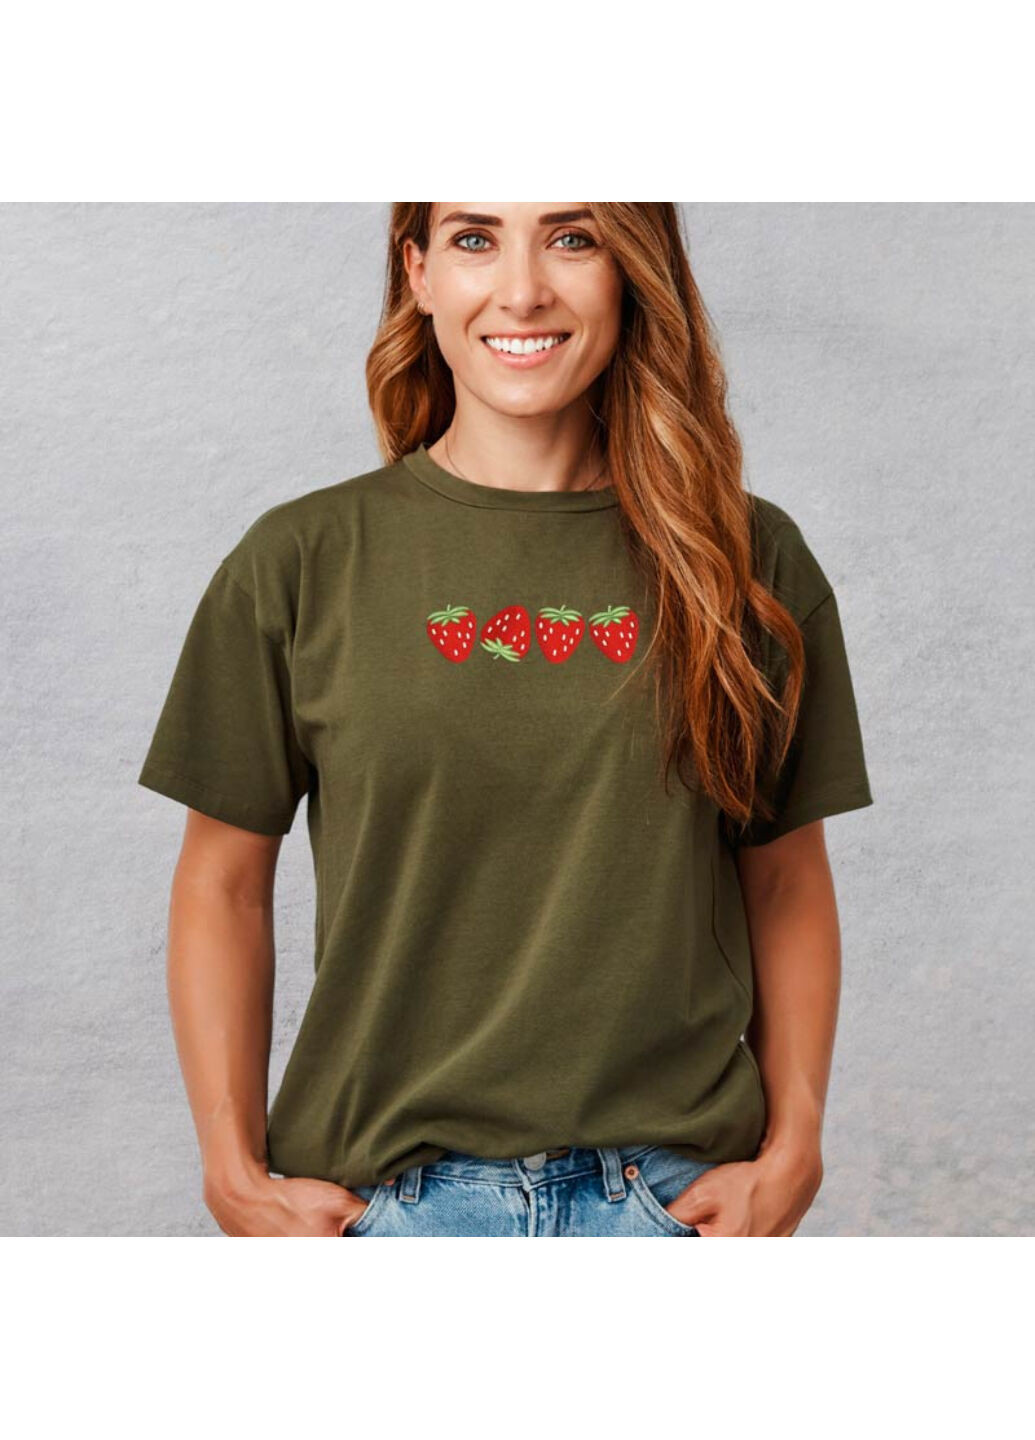 Хаки (оливковая) футболка з вишивкою полуничка 02-1 женская хаки l No Brand